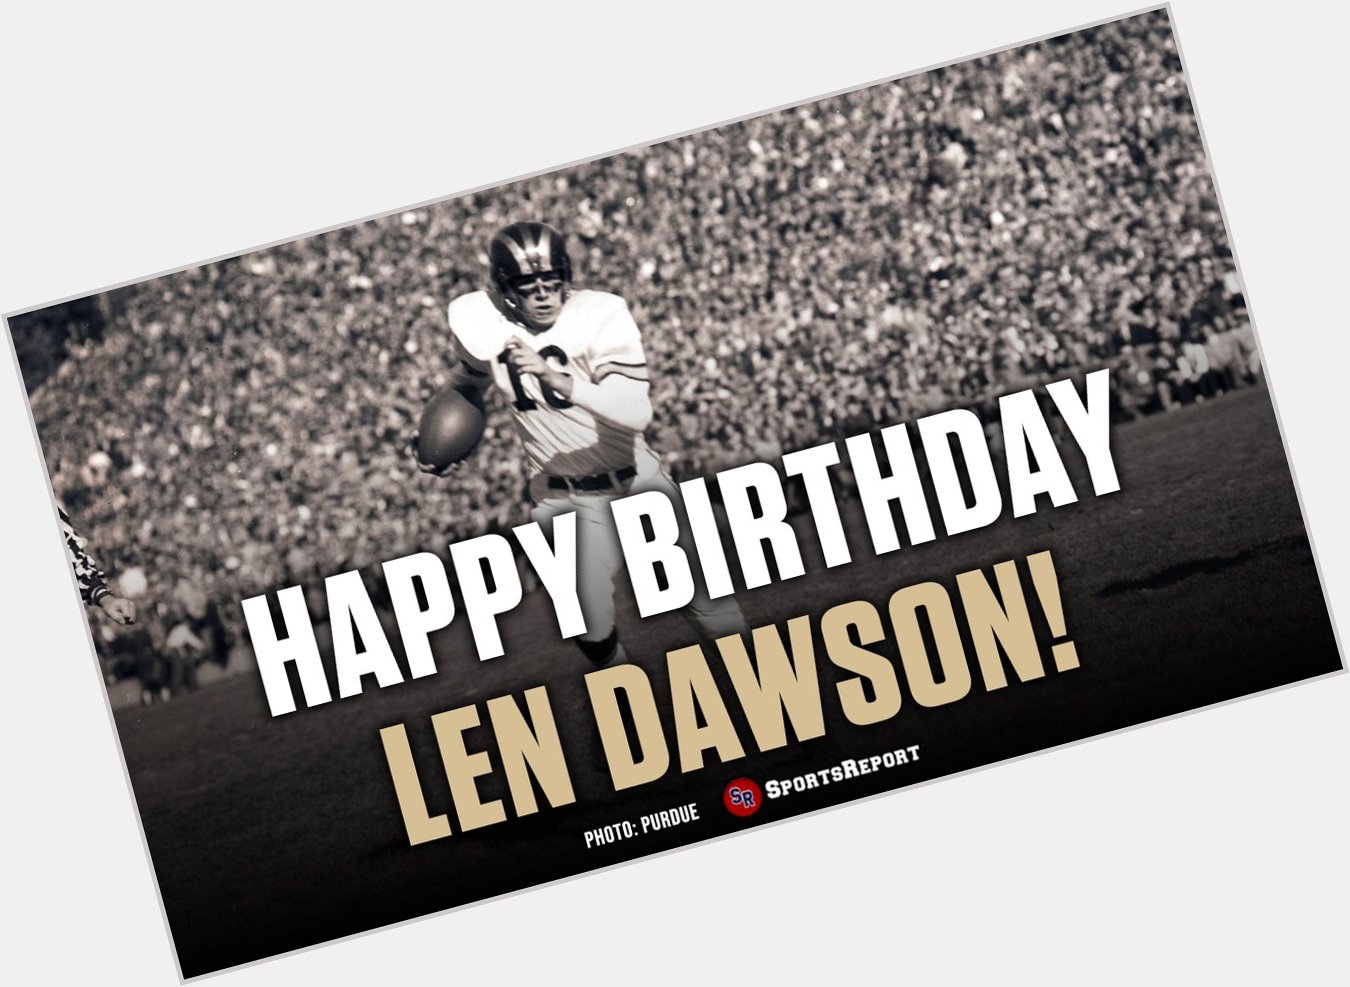  Fans, let\s wish legend Len Dawson a Happy Birthday! BOILER UP!! 